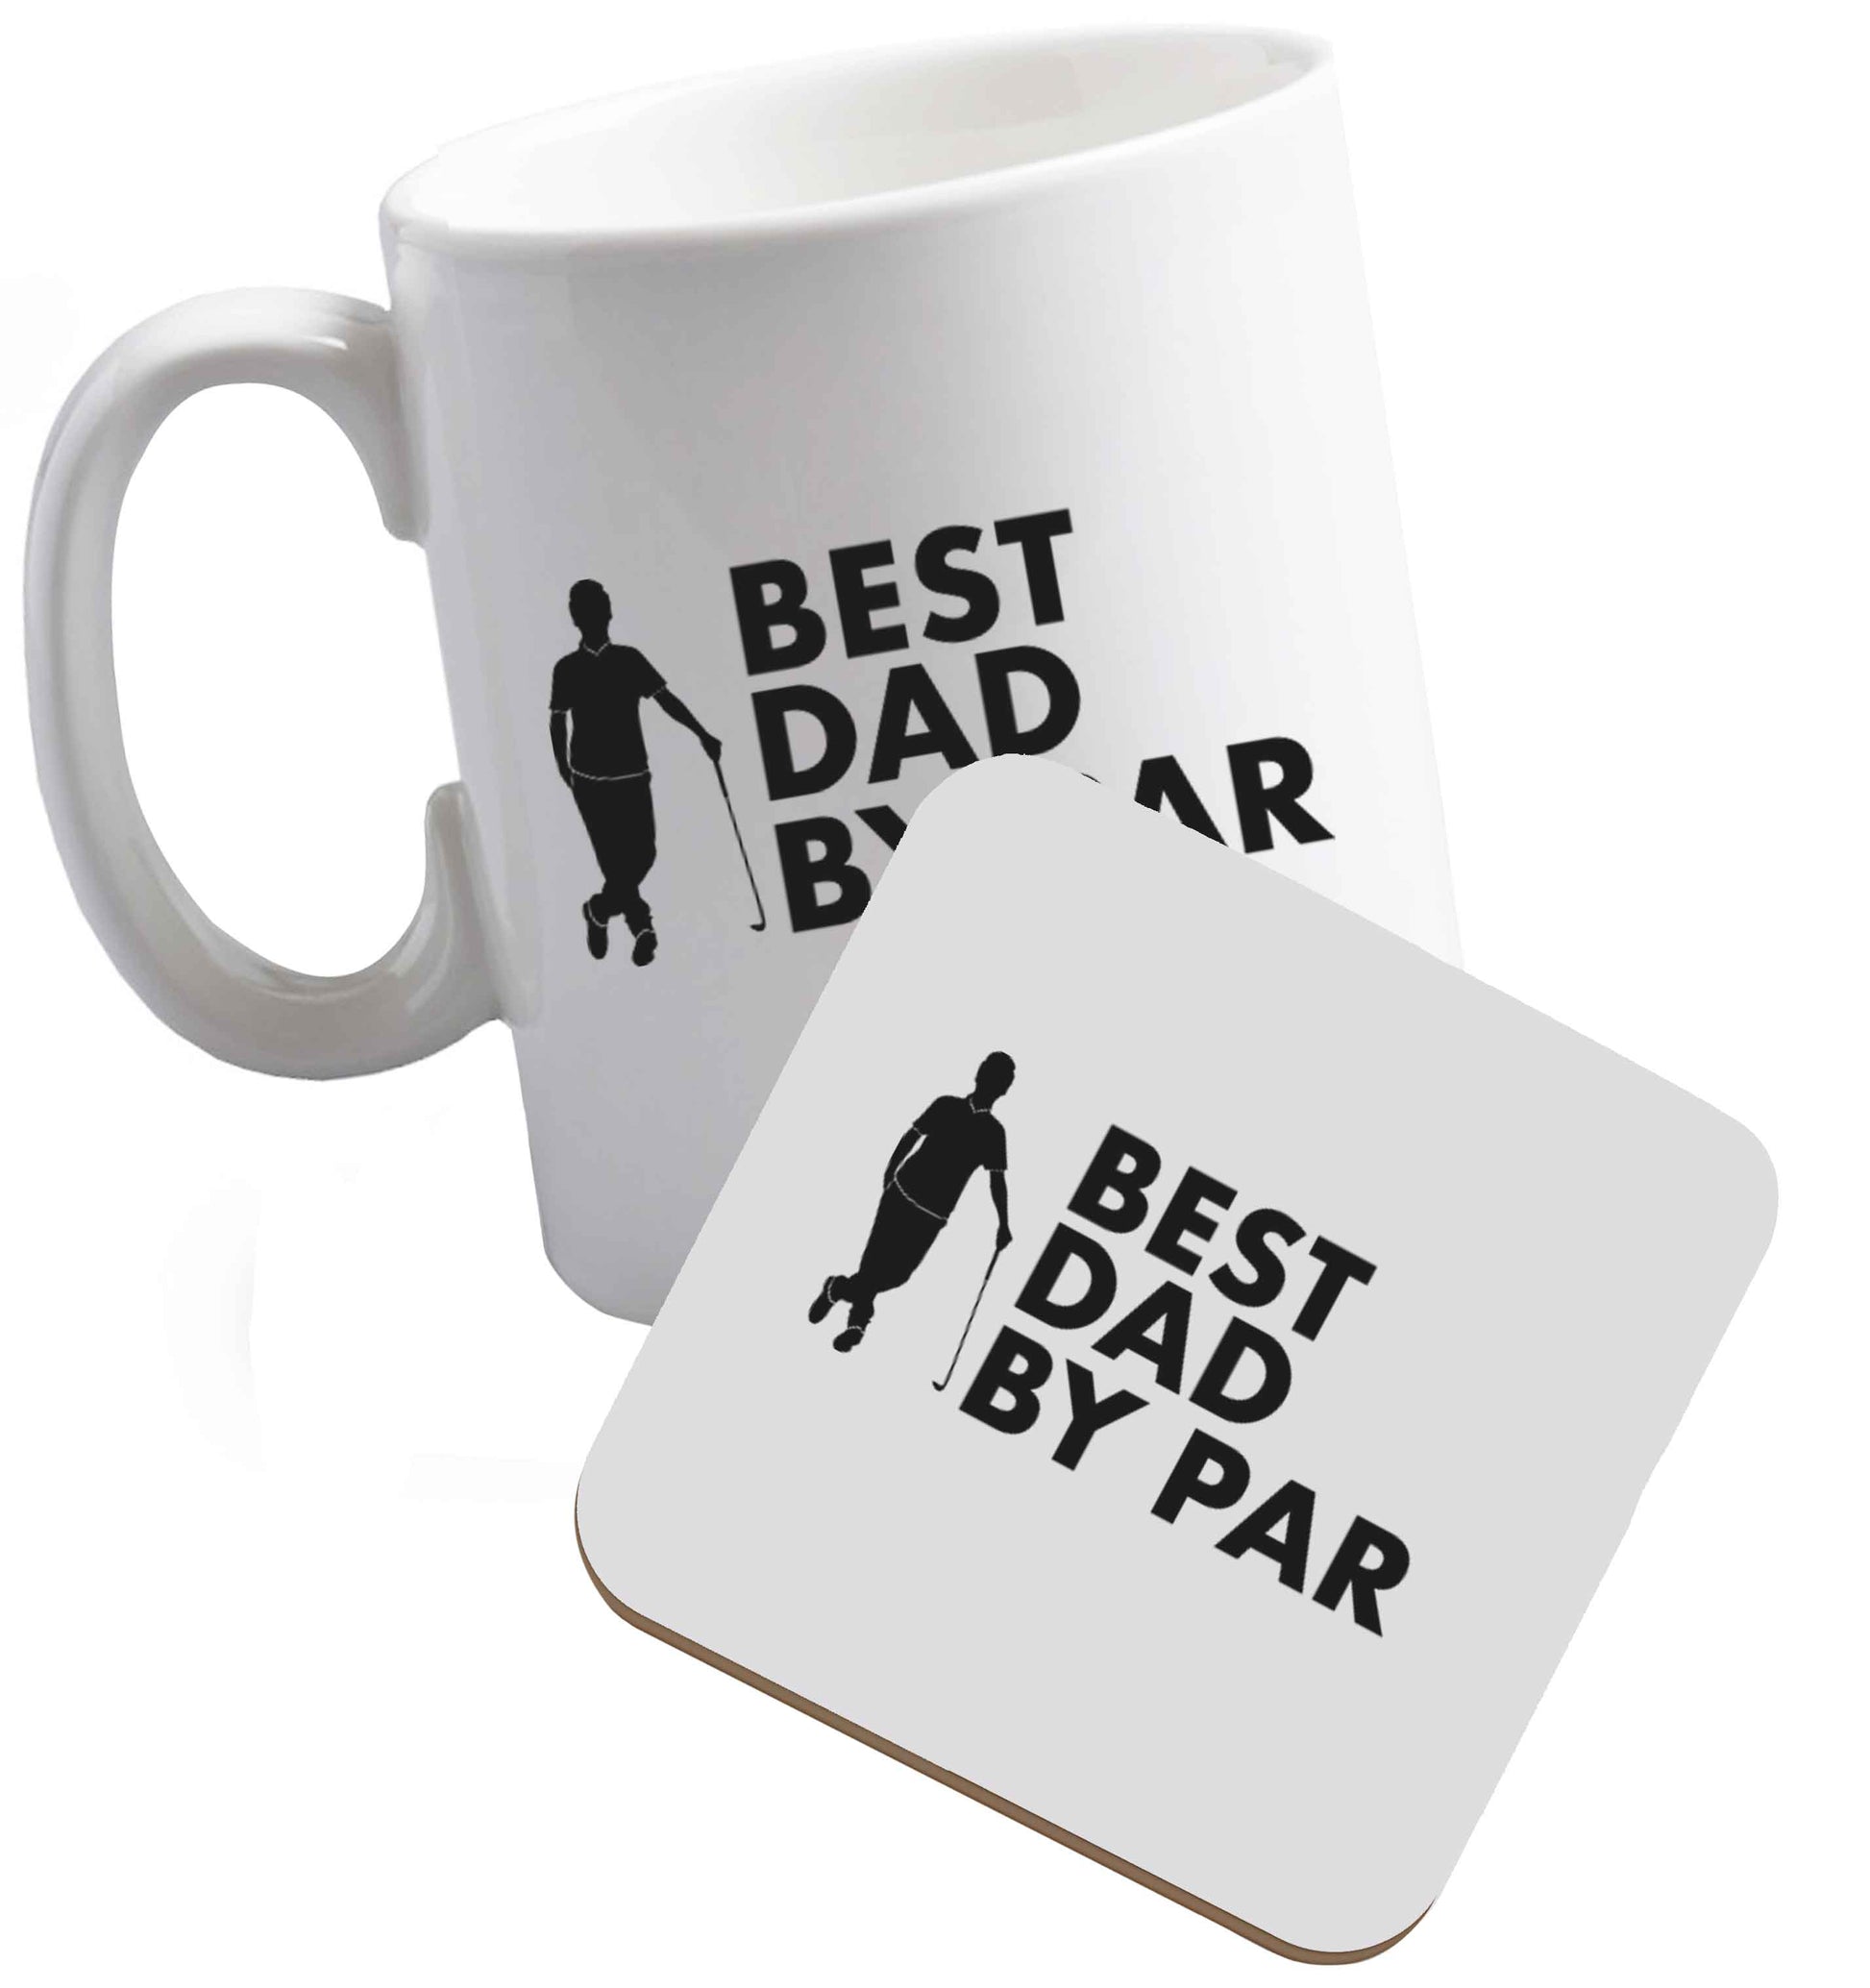 10 oz Best dad by par ceramic mug and coaster set right handed